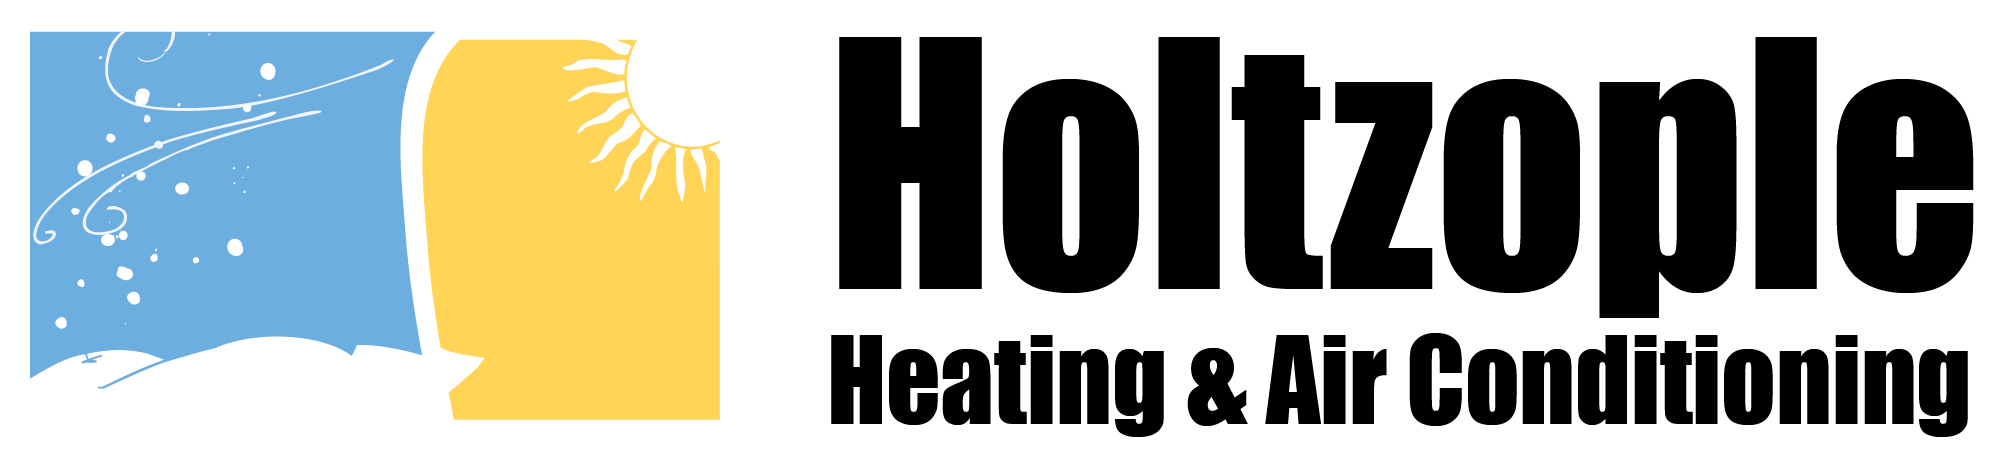 Holtzople-new-logo